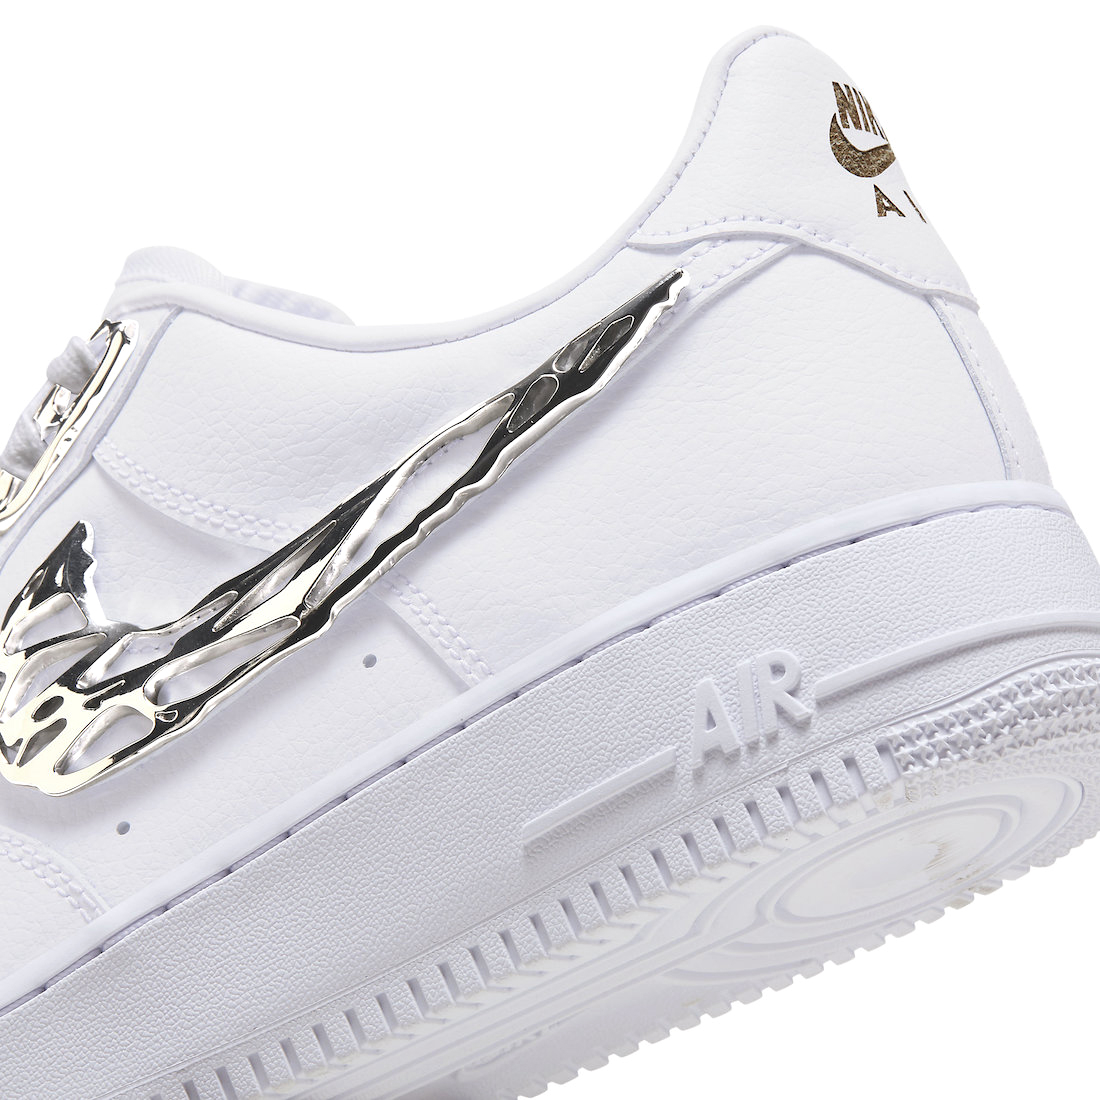 Nike Air Force 1 White Custom 'Turquoise Snakeskin' Edition